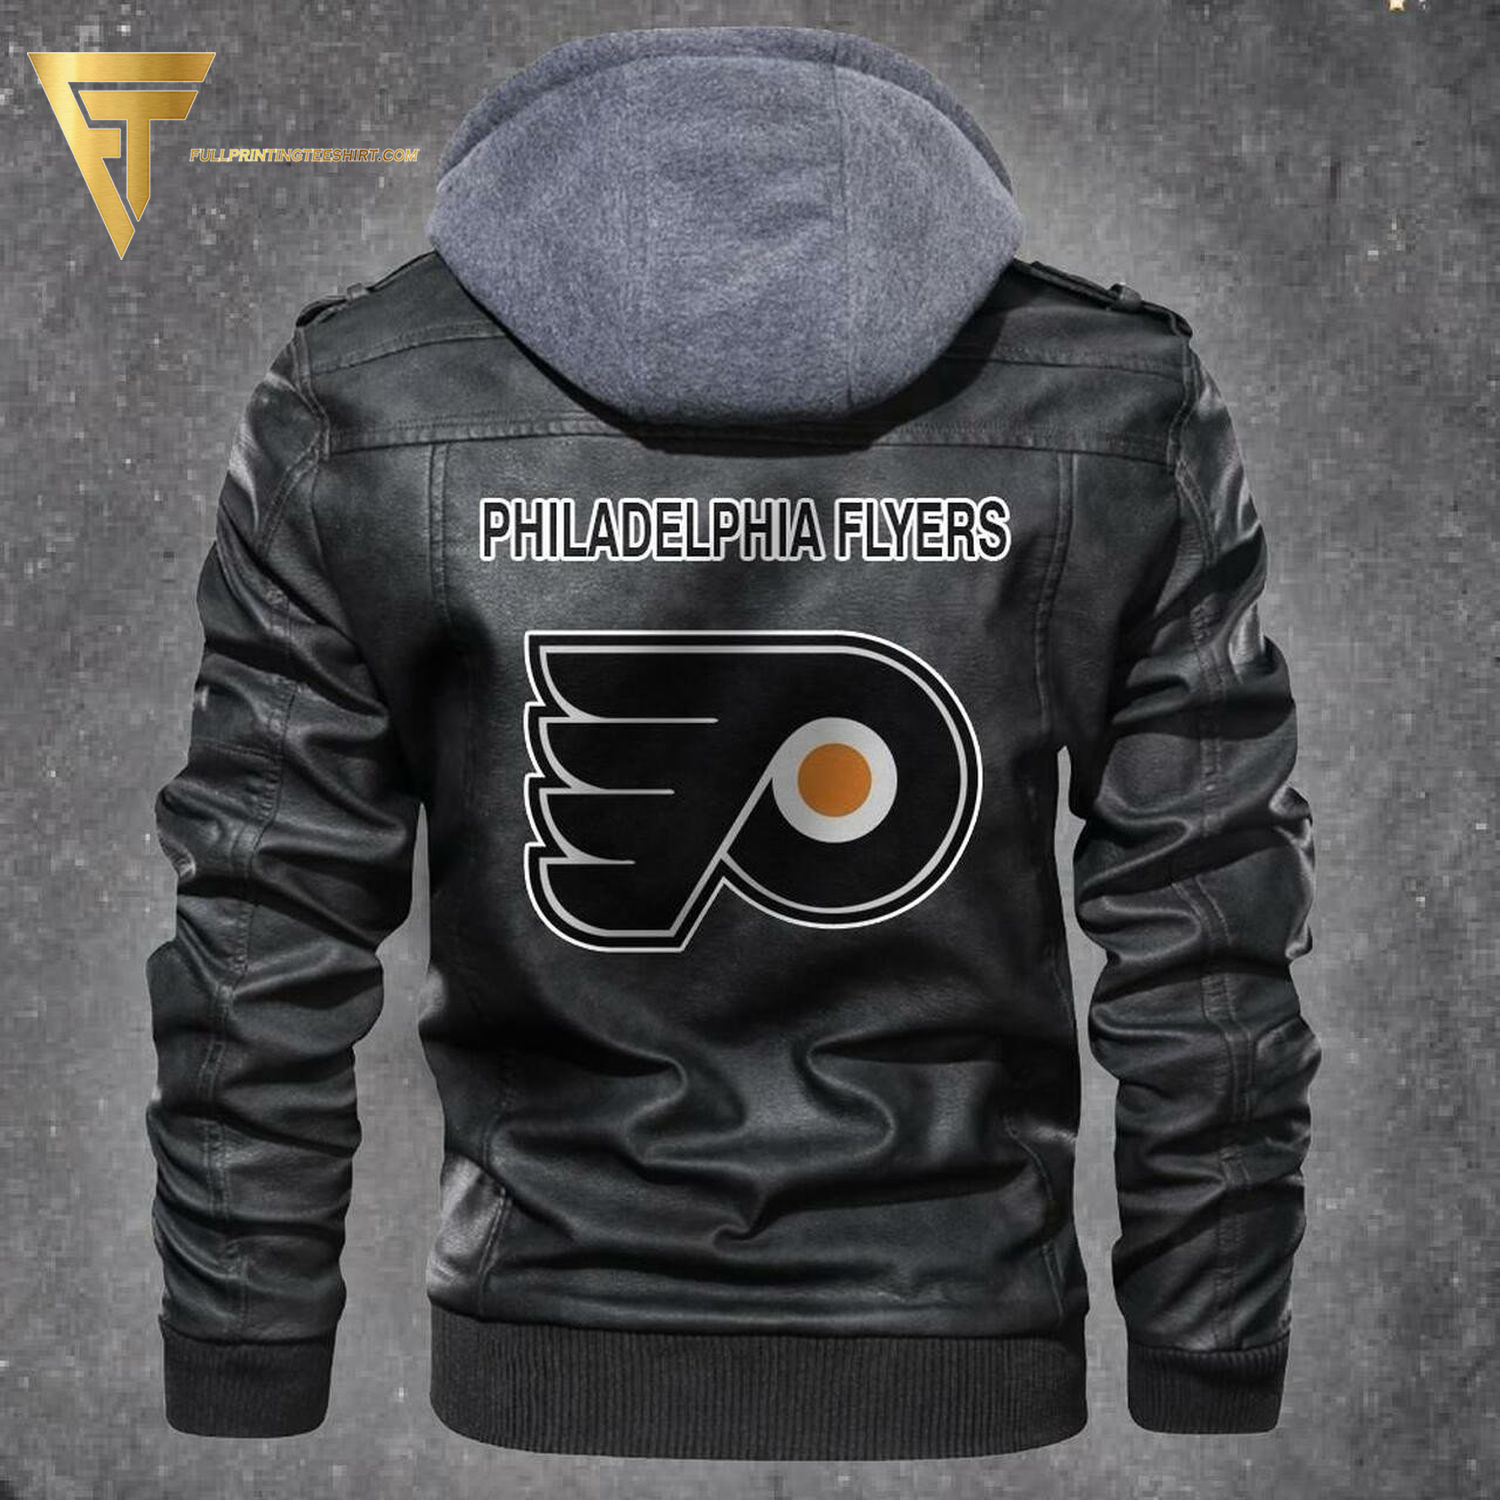 National Hockey League Philadelphia Flyers Leather Jacket